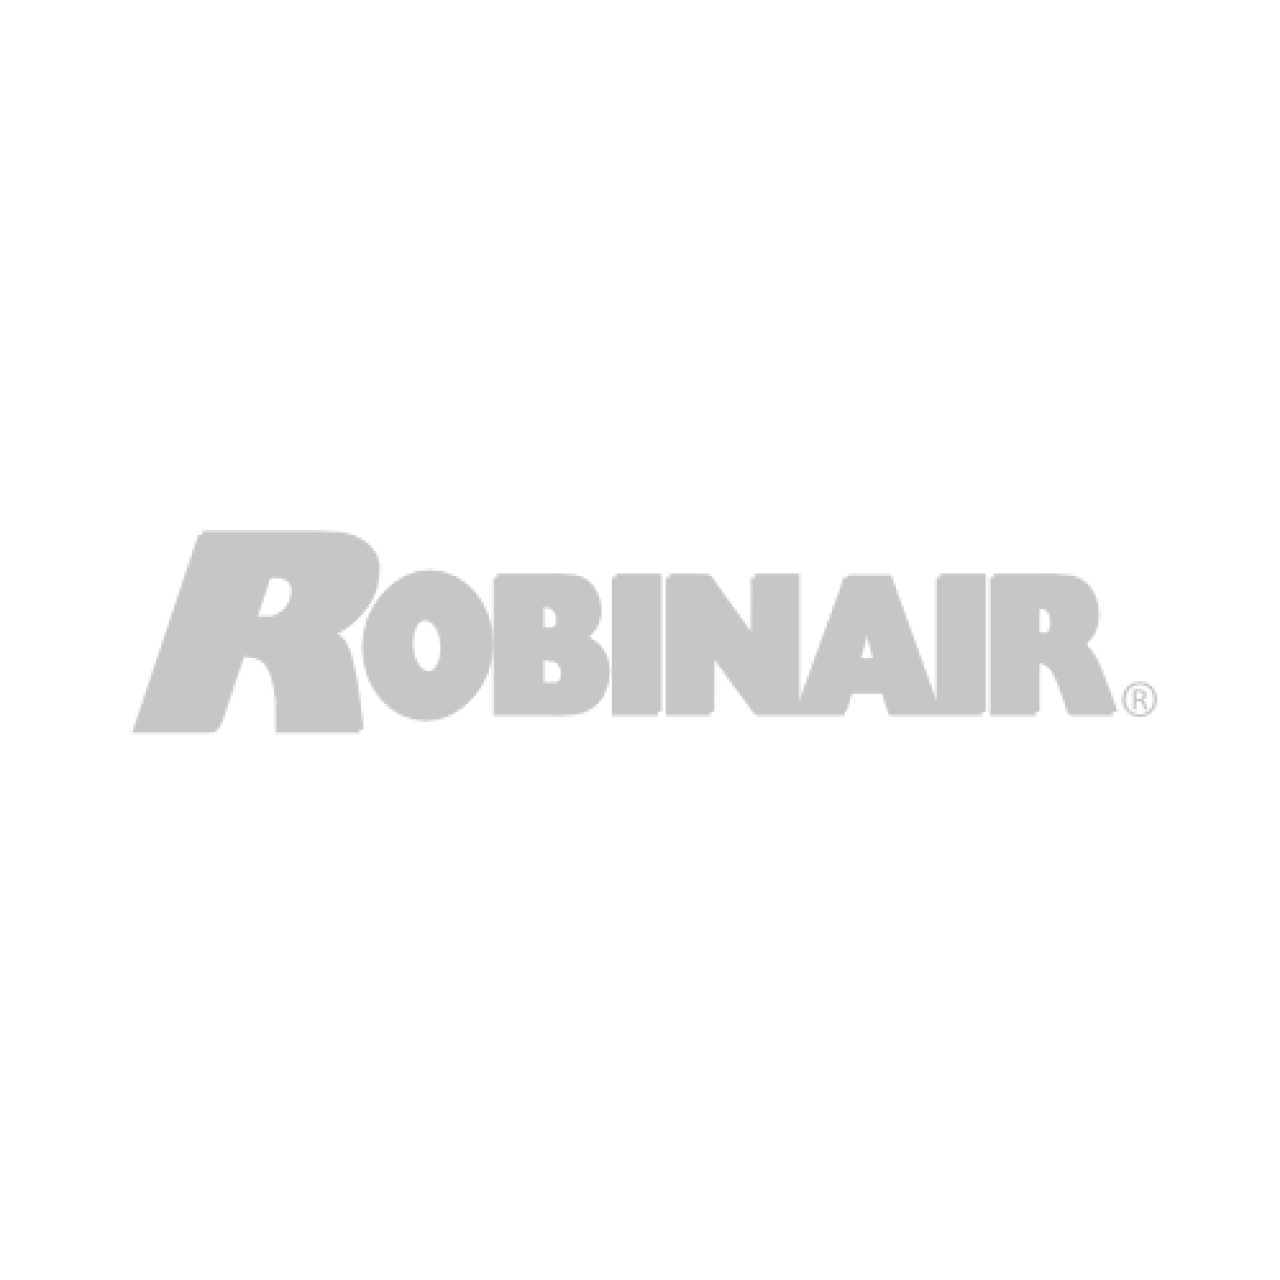 Robinair Logo - WHEEL, SIDEWINDER